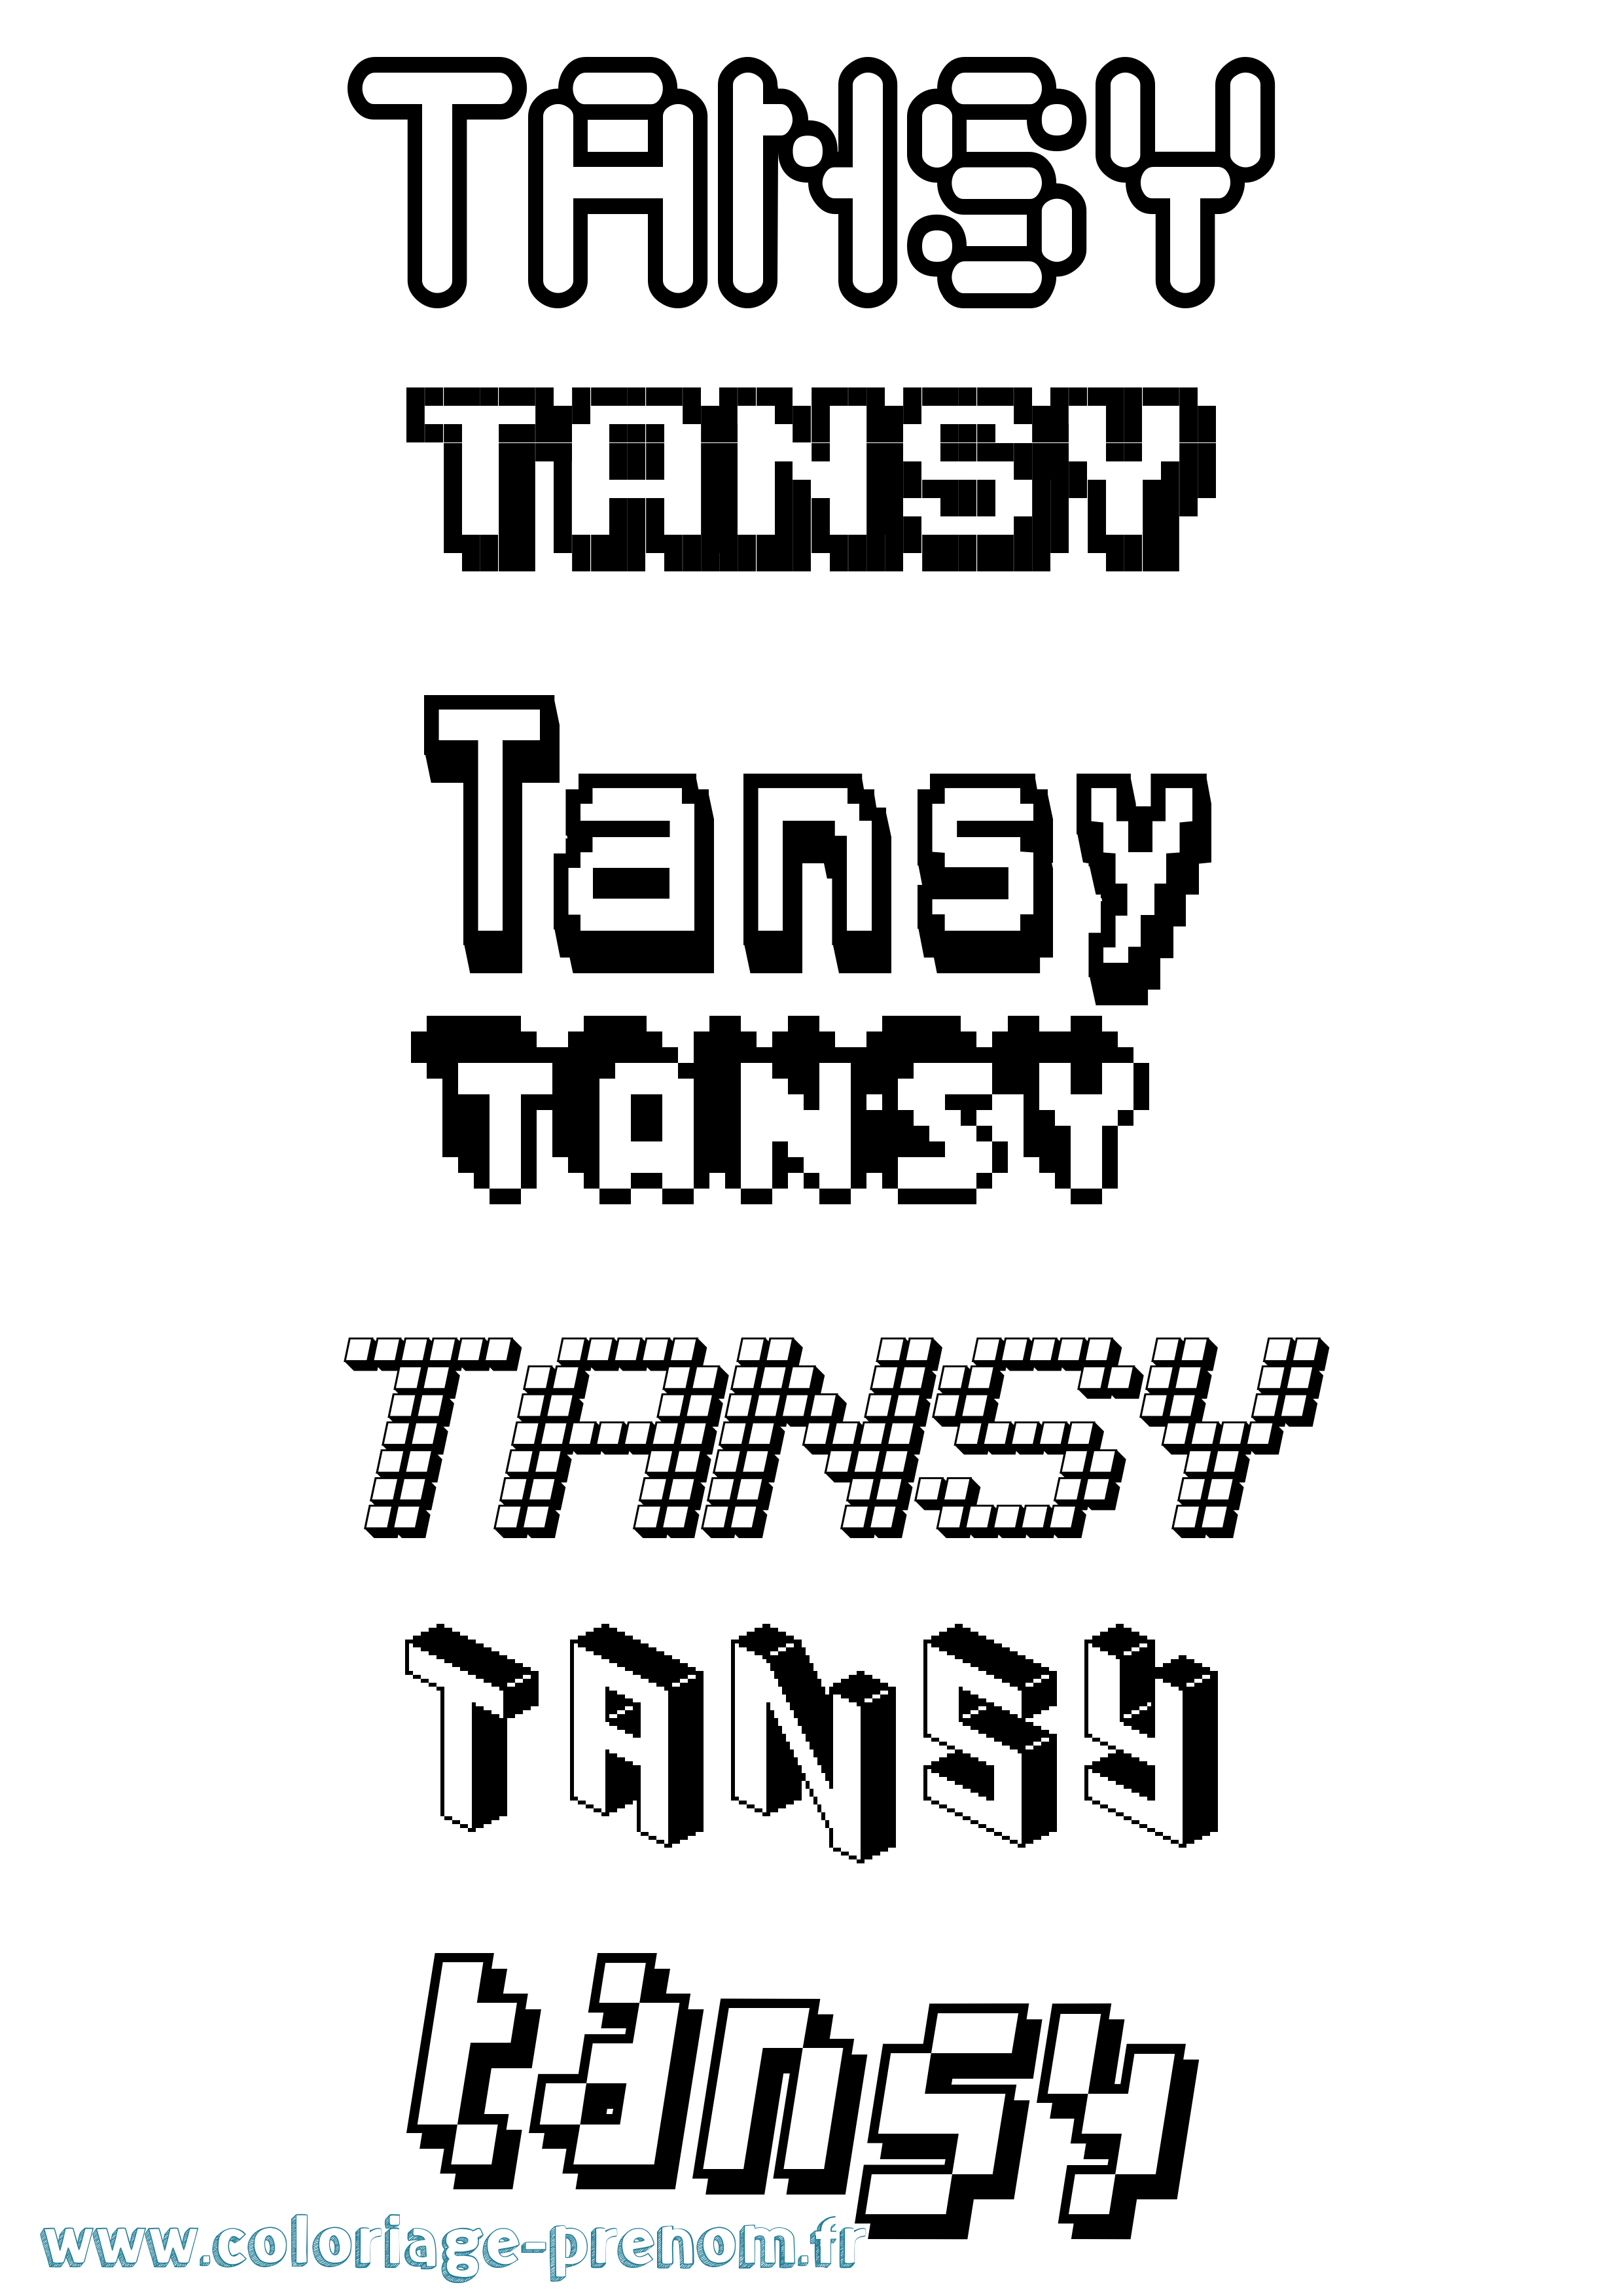 Coloriage prénom Tansy Pixel